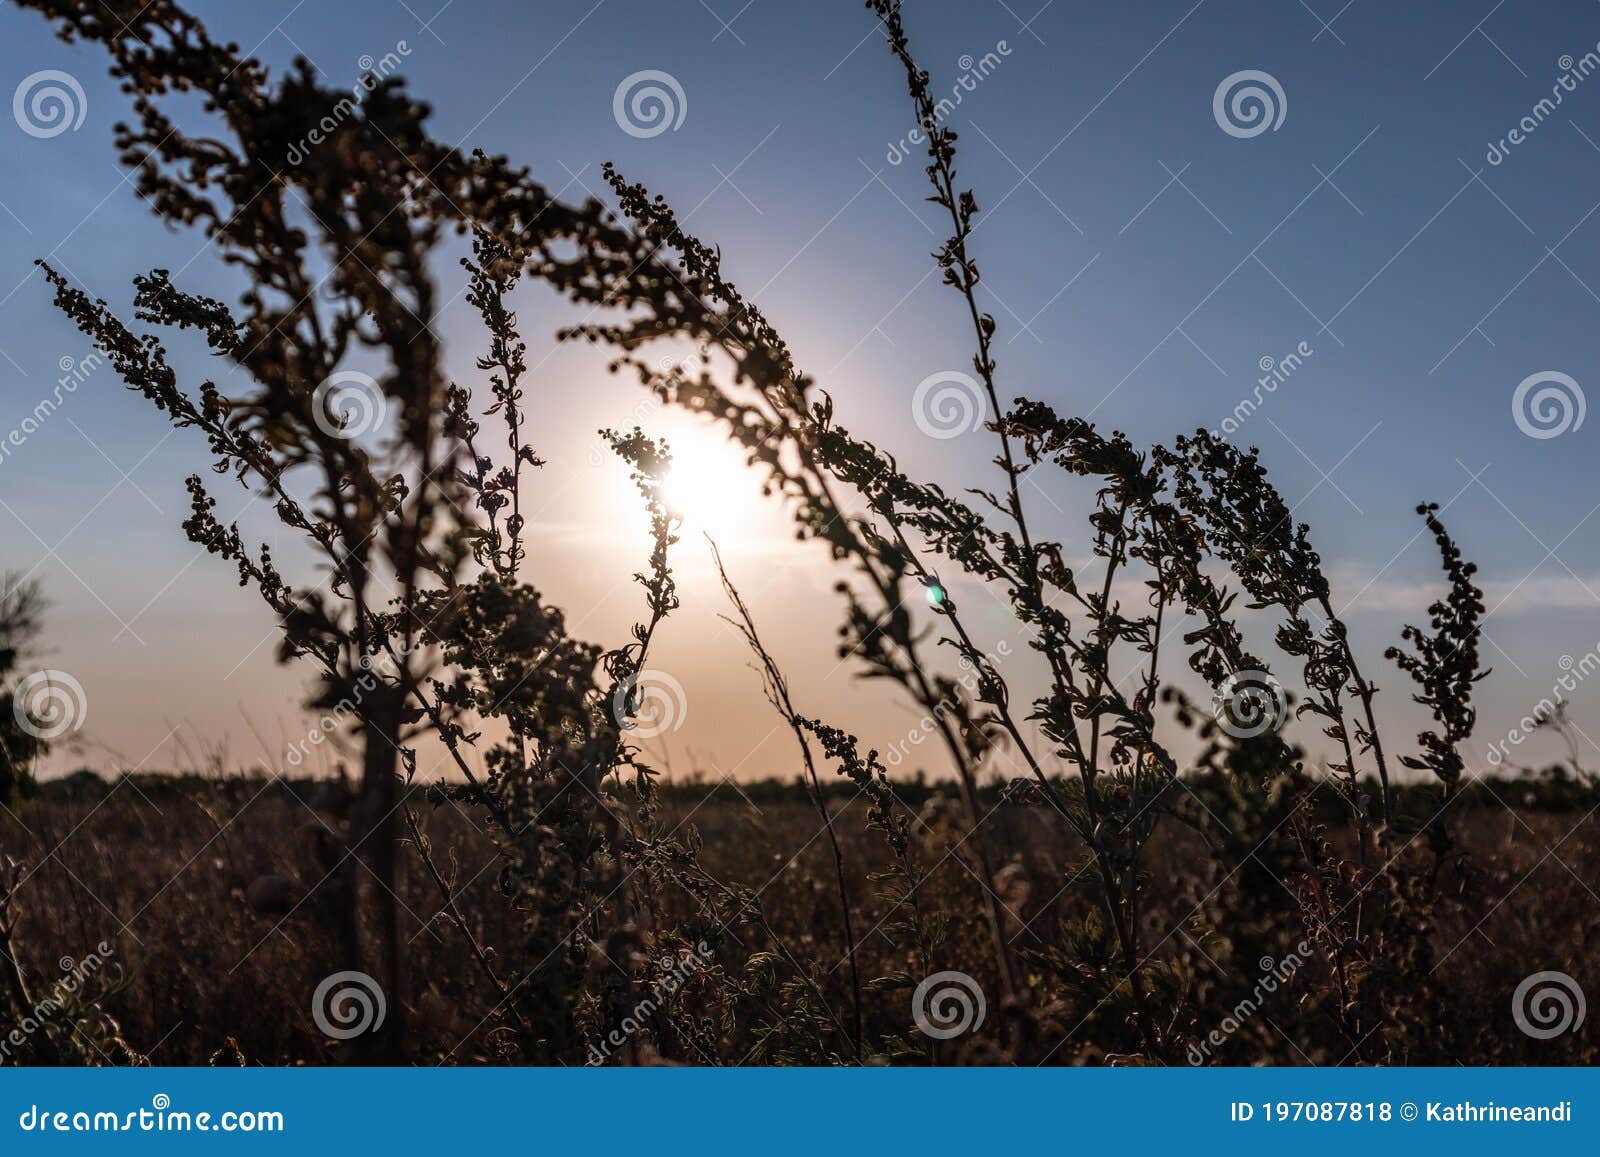 sagebrush wild grass on sunset sky background